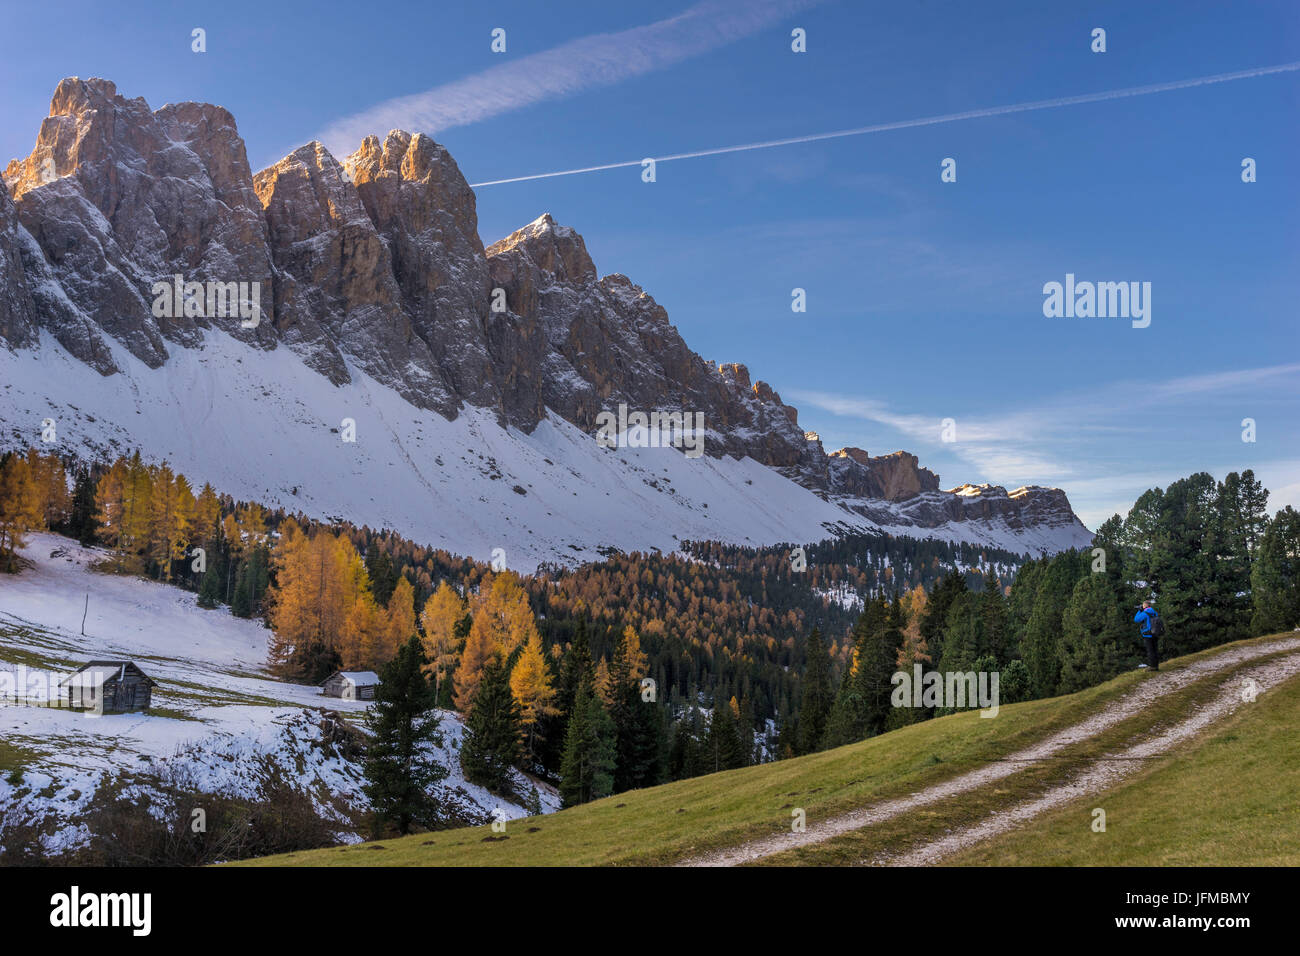 Fotograf macht einige Aufnahmen Geisler, Val di Funes, Trentino Alto Adige, Italien, Stockfoto